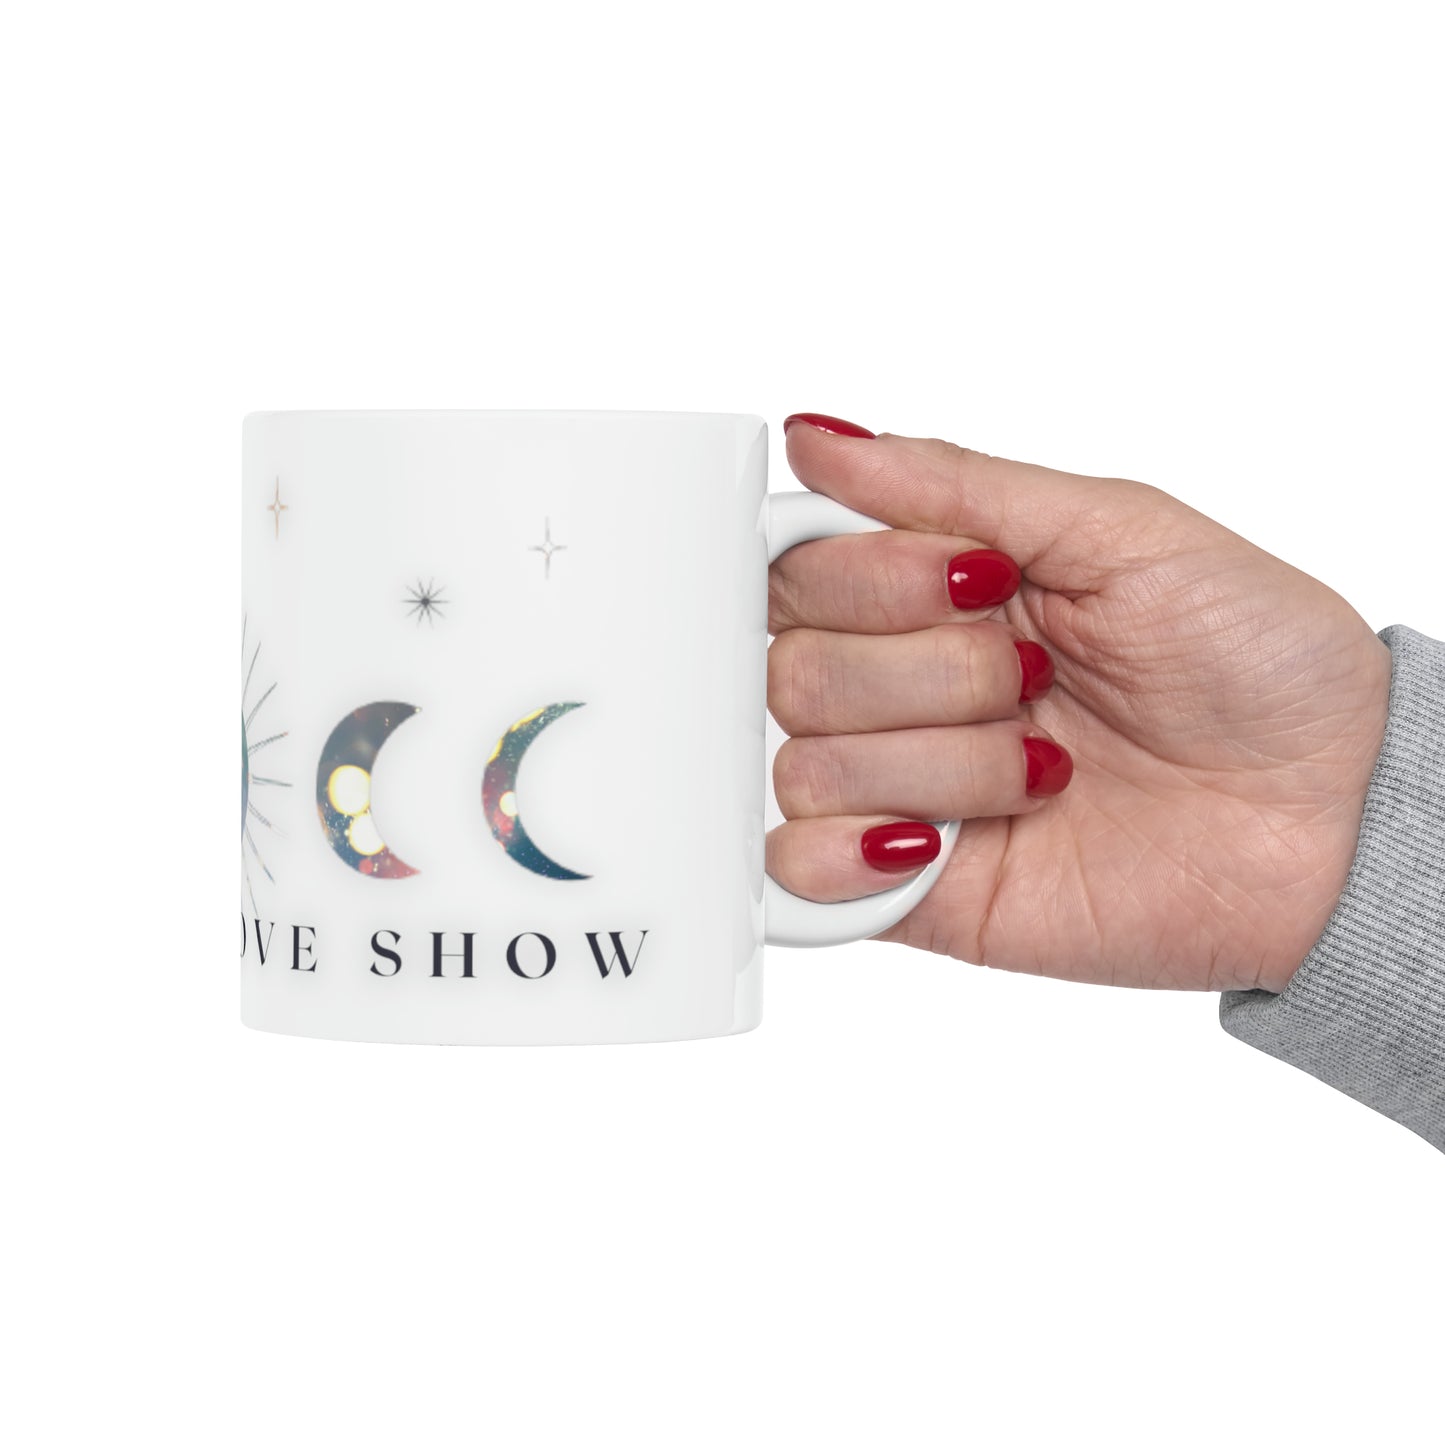 Cup of Kindness: 'The Self Love Show' Inspirational Mug